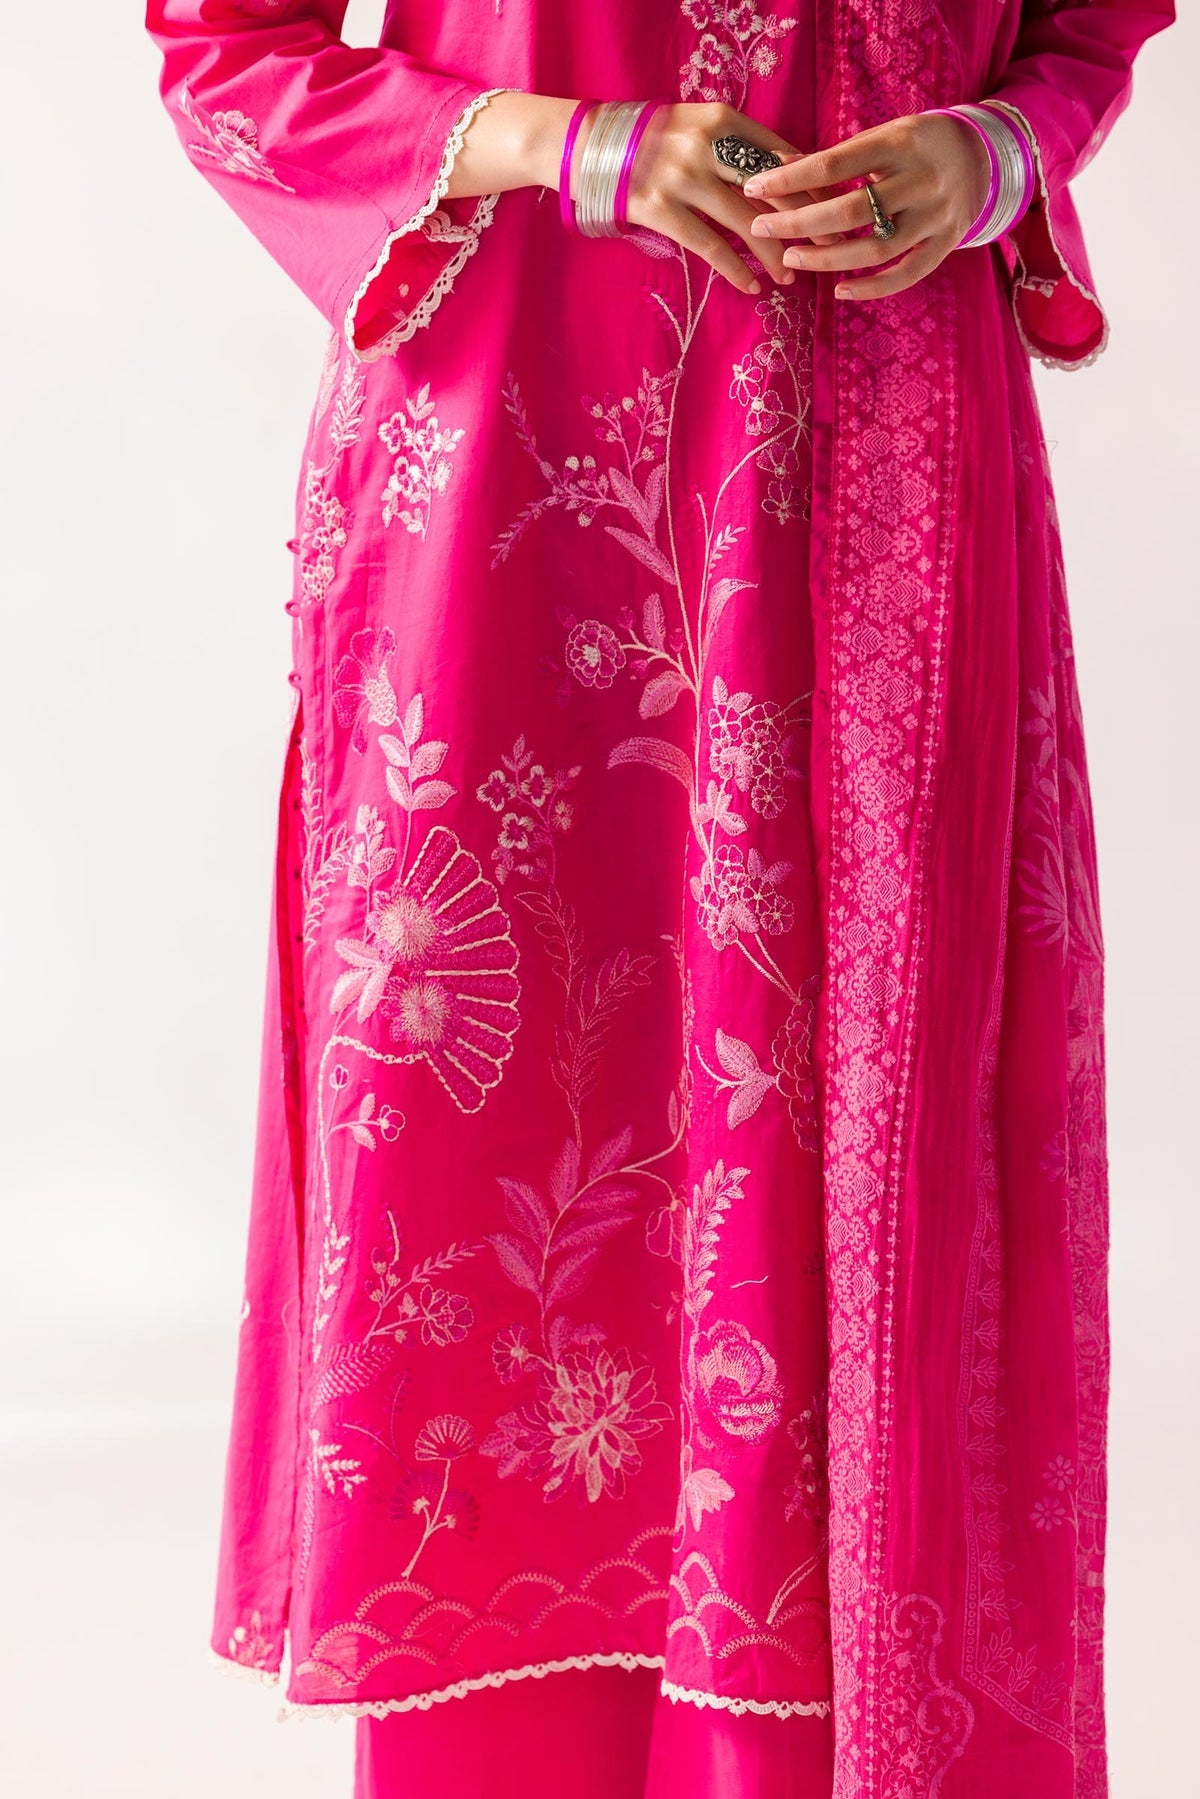 Taanabaana | Mem Saab Collection | M3240 - Khanumjan  Pakistani Clothes and Designer Dresses in UK, USA 